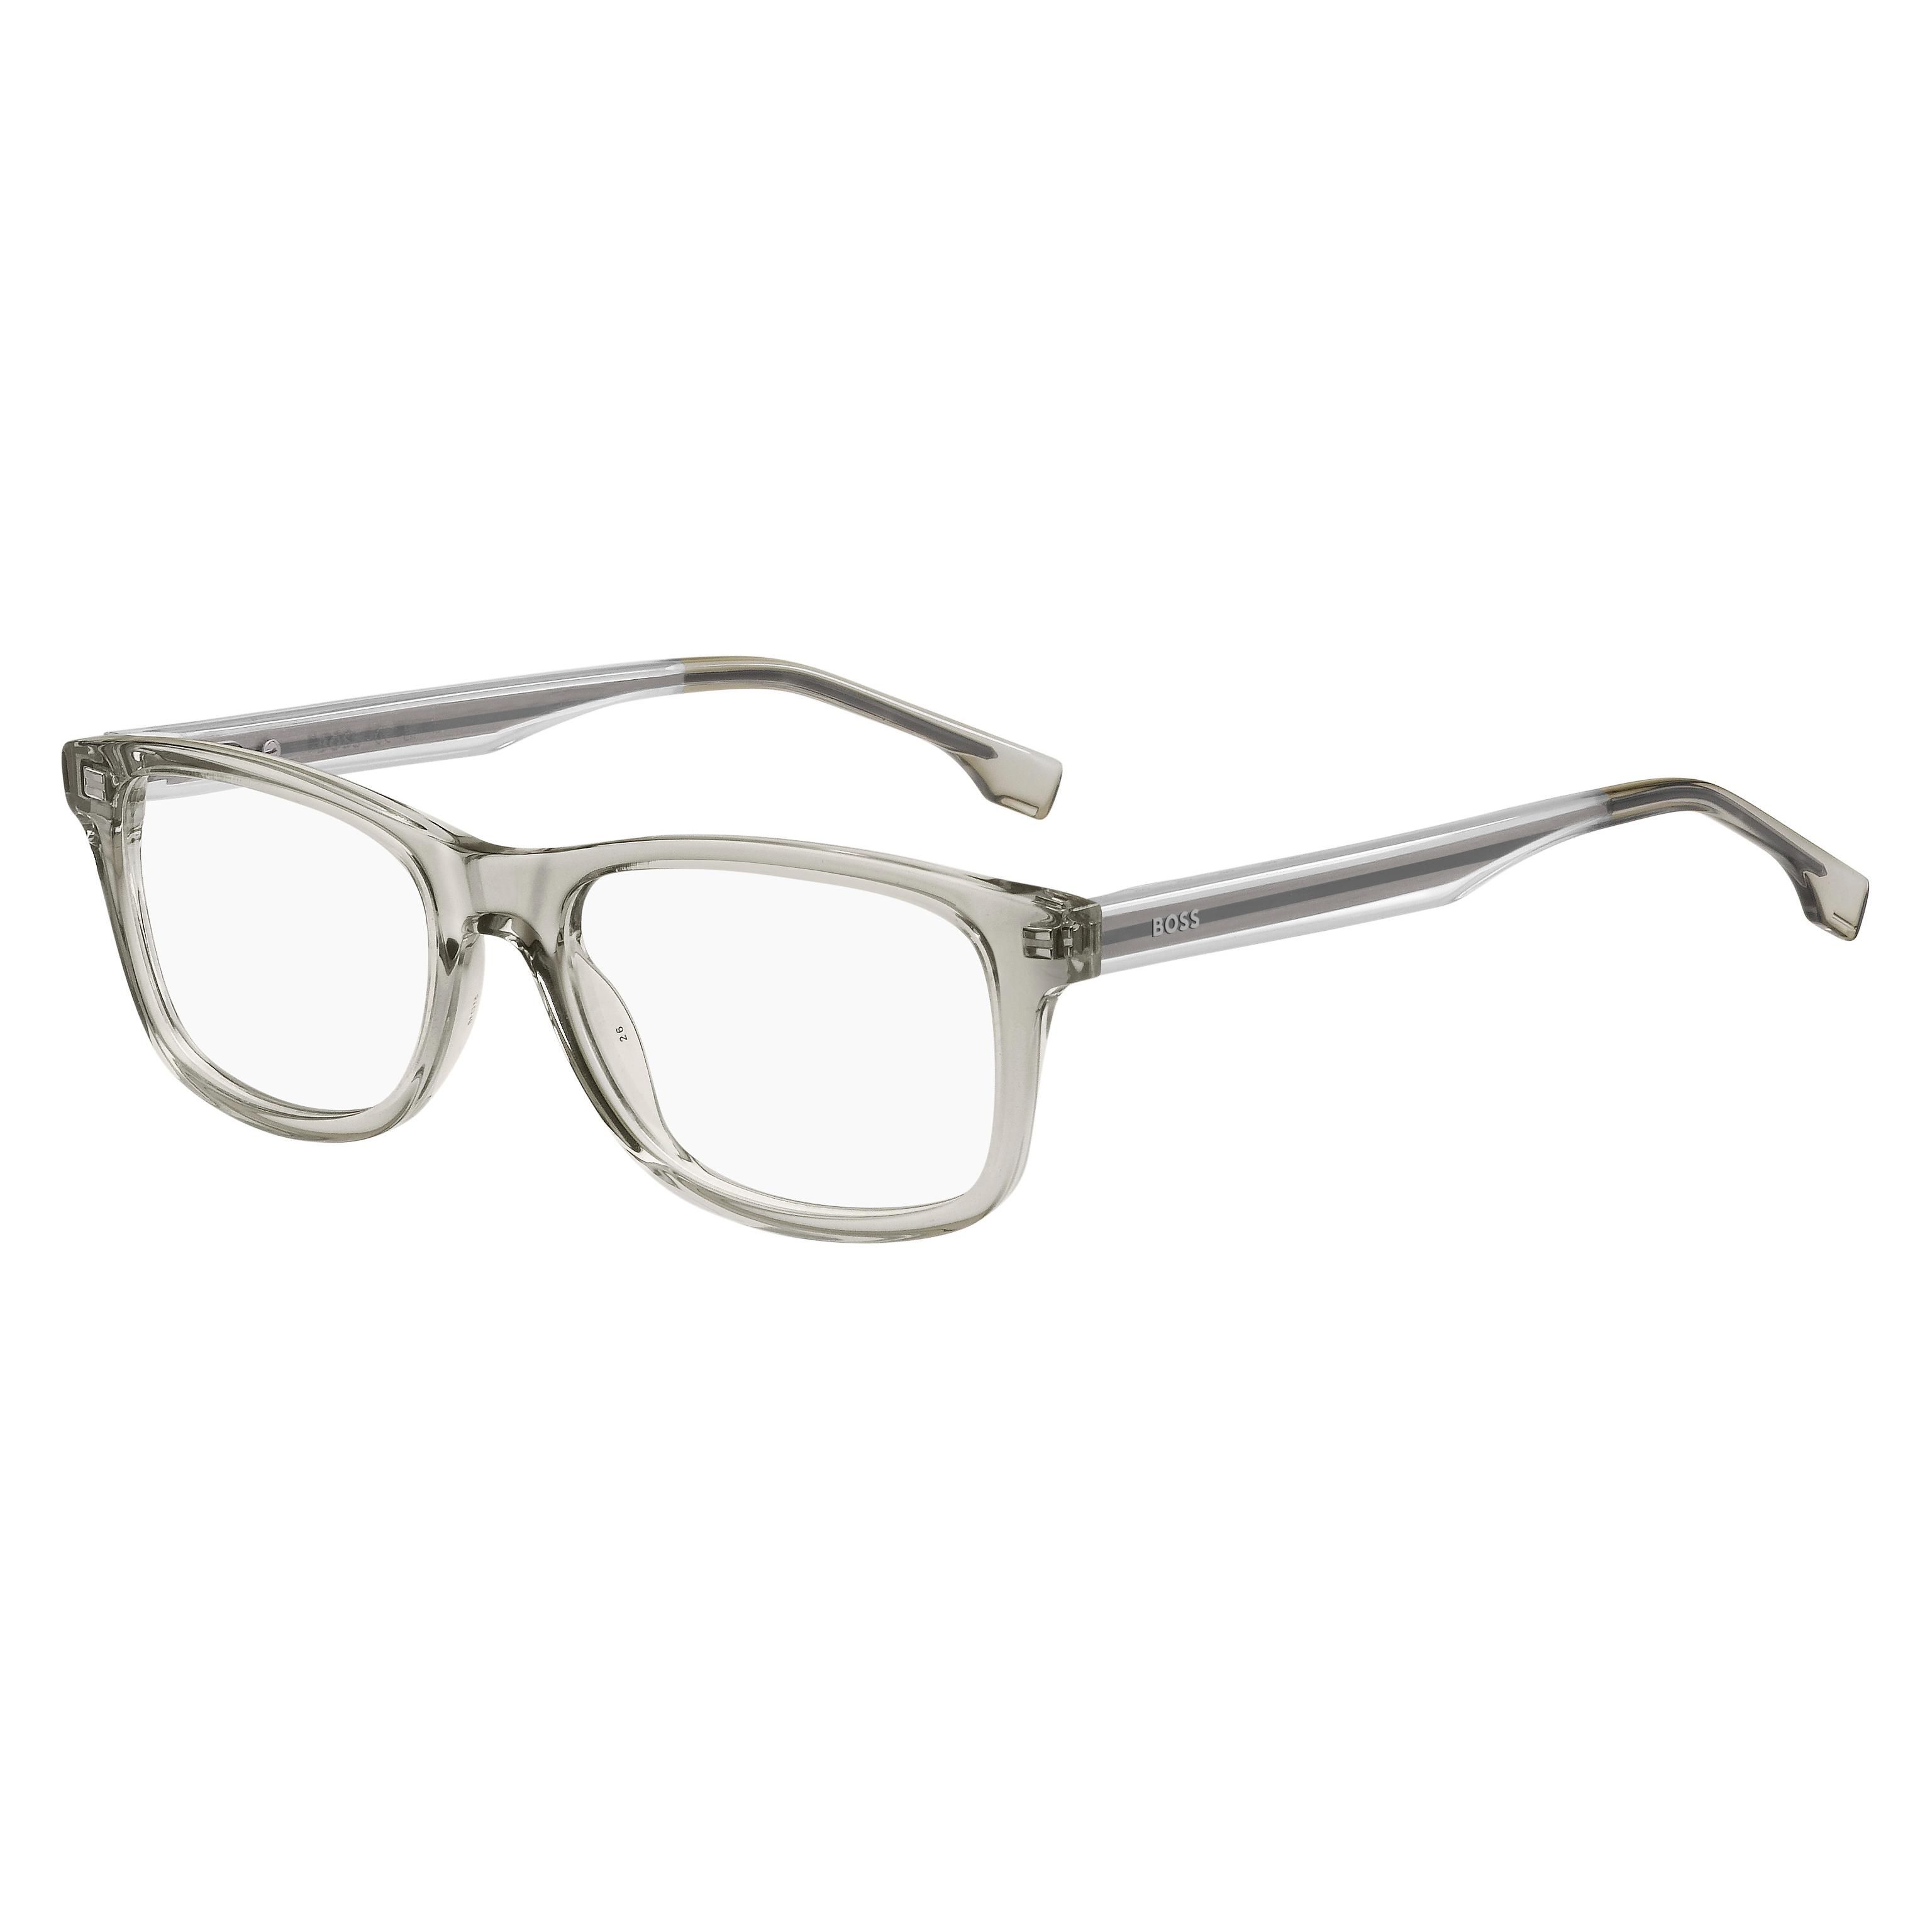 BOSS 1547 Square Eyeglasses CBL - size 51